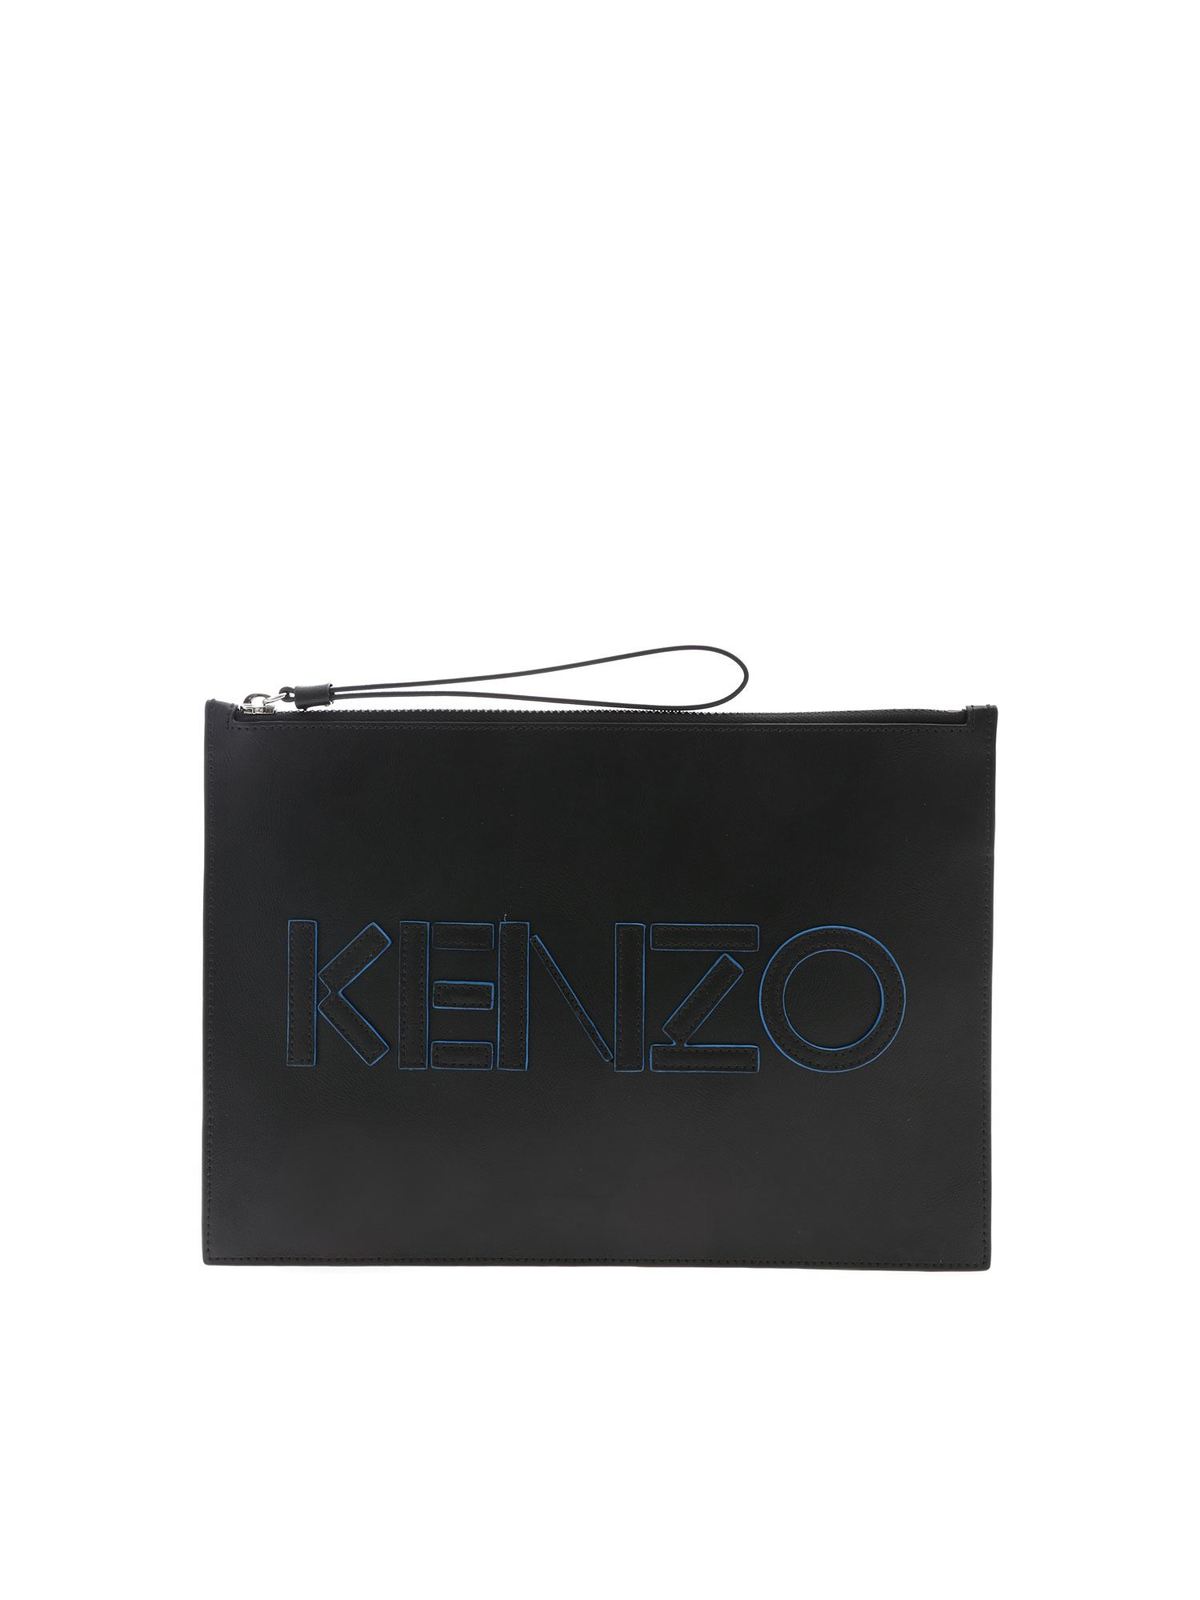 Kenzo - Kenzo Kontrast A4 clutch bag in 